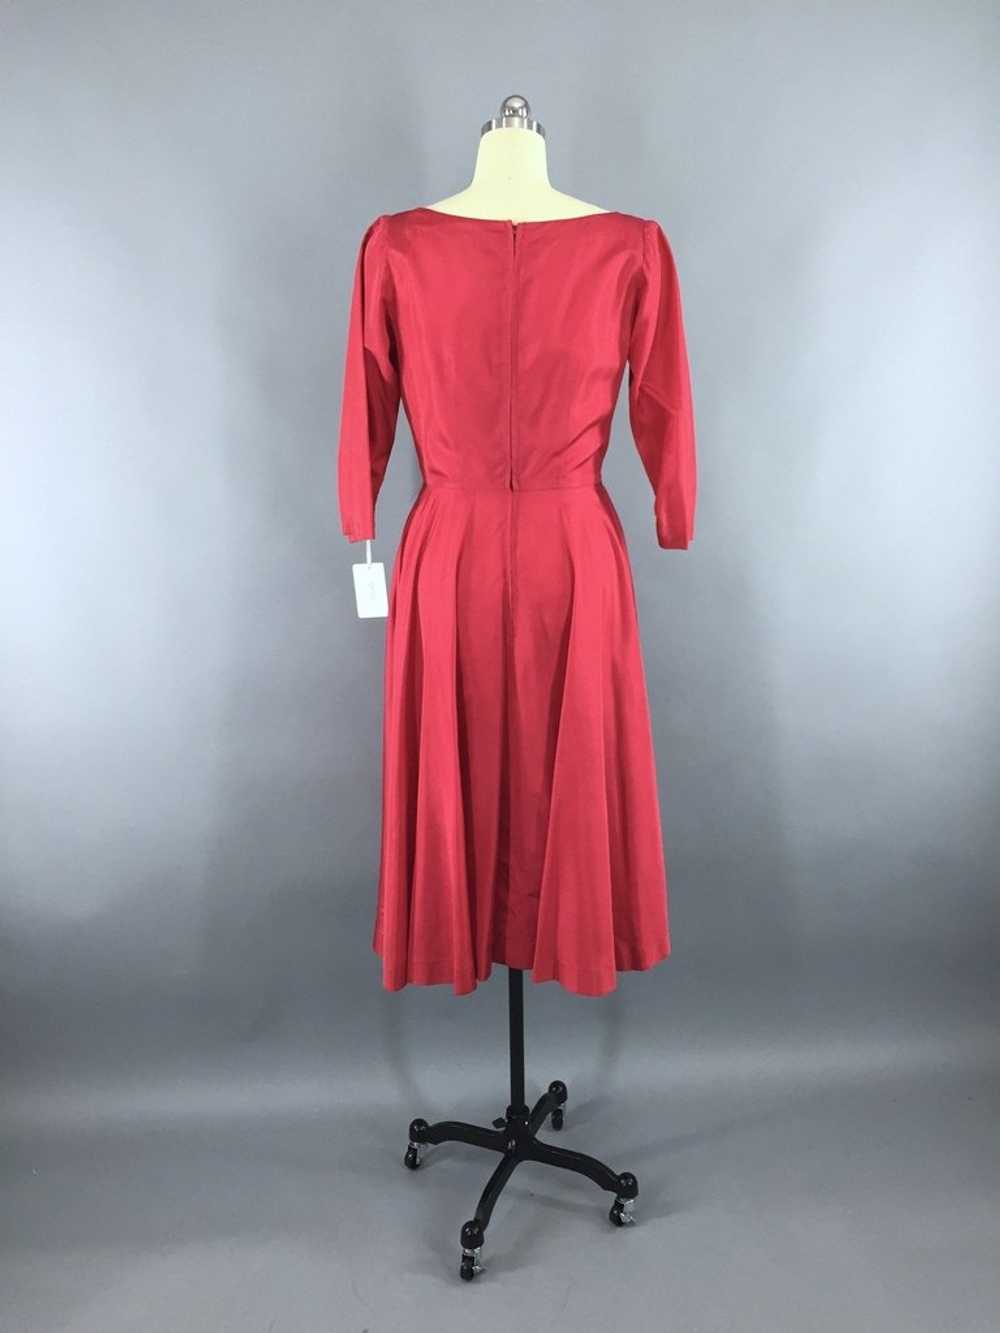 1950s Vintage Raspberry Red Taffeta Cocktail Dress - image 8